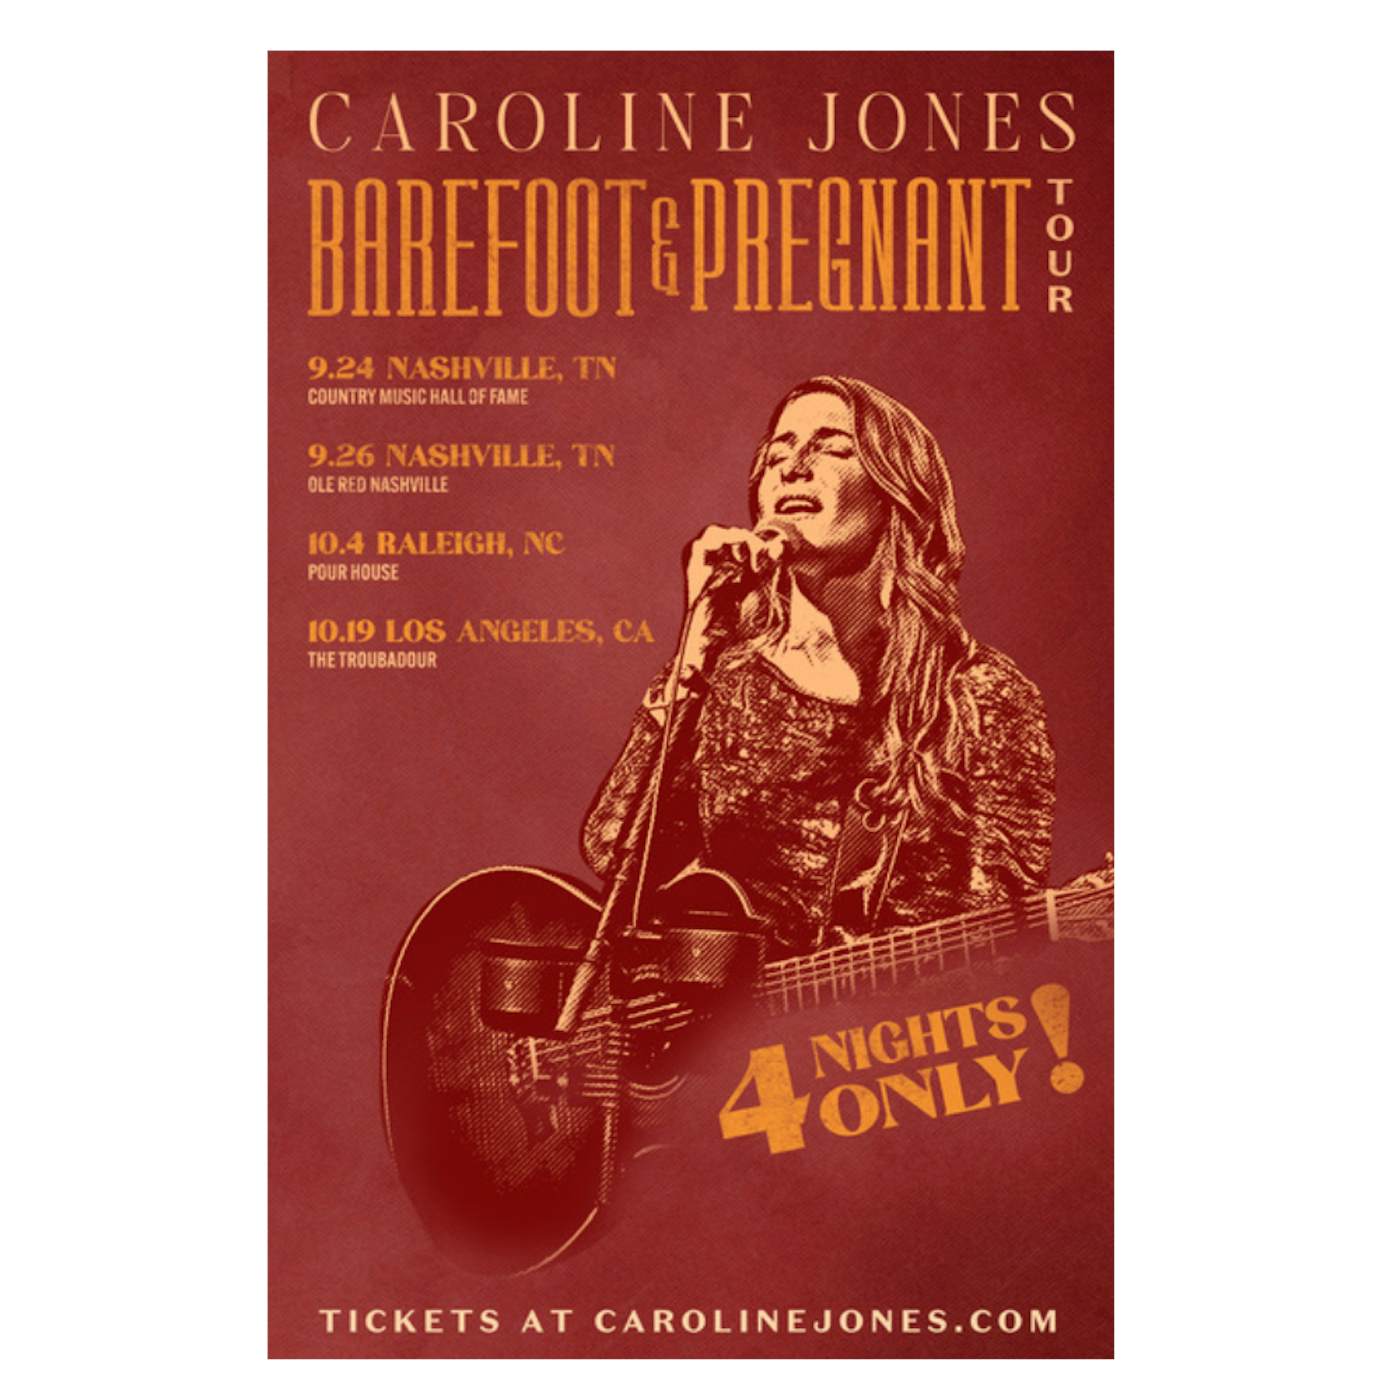 Caroline Jones Barefoot and Pregnant Poster